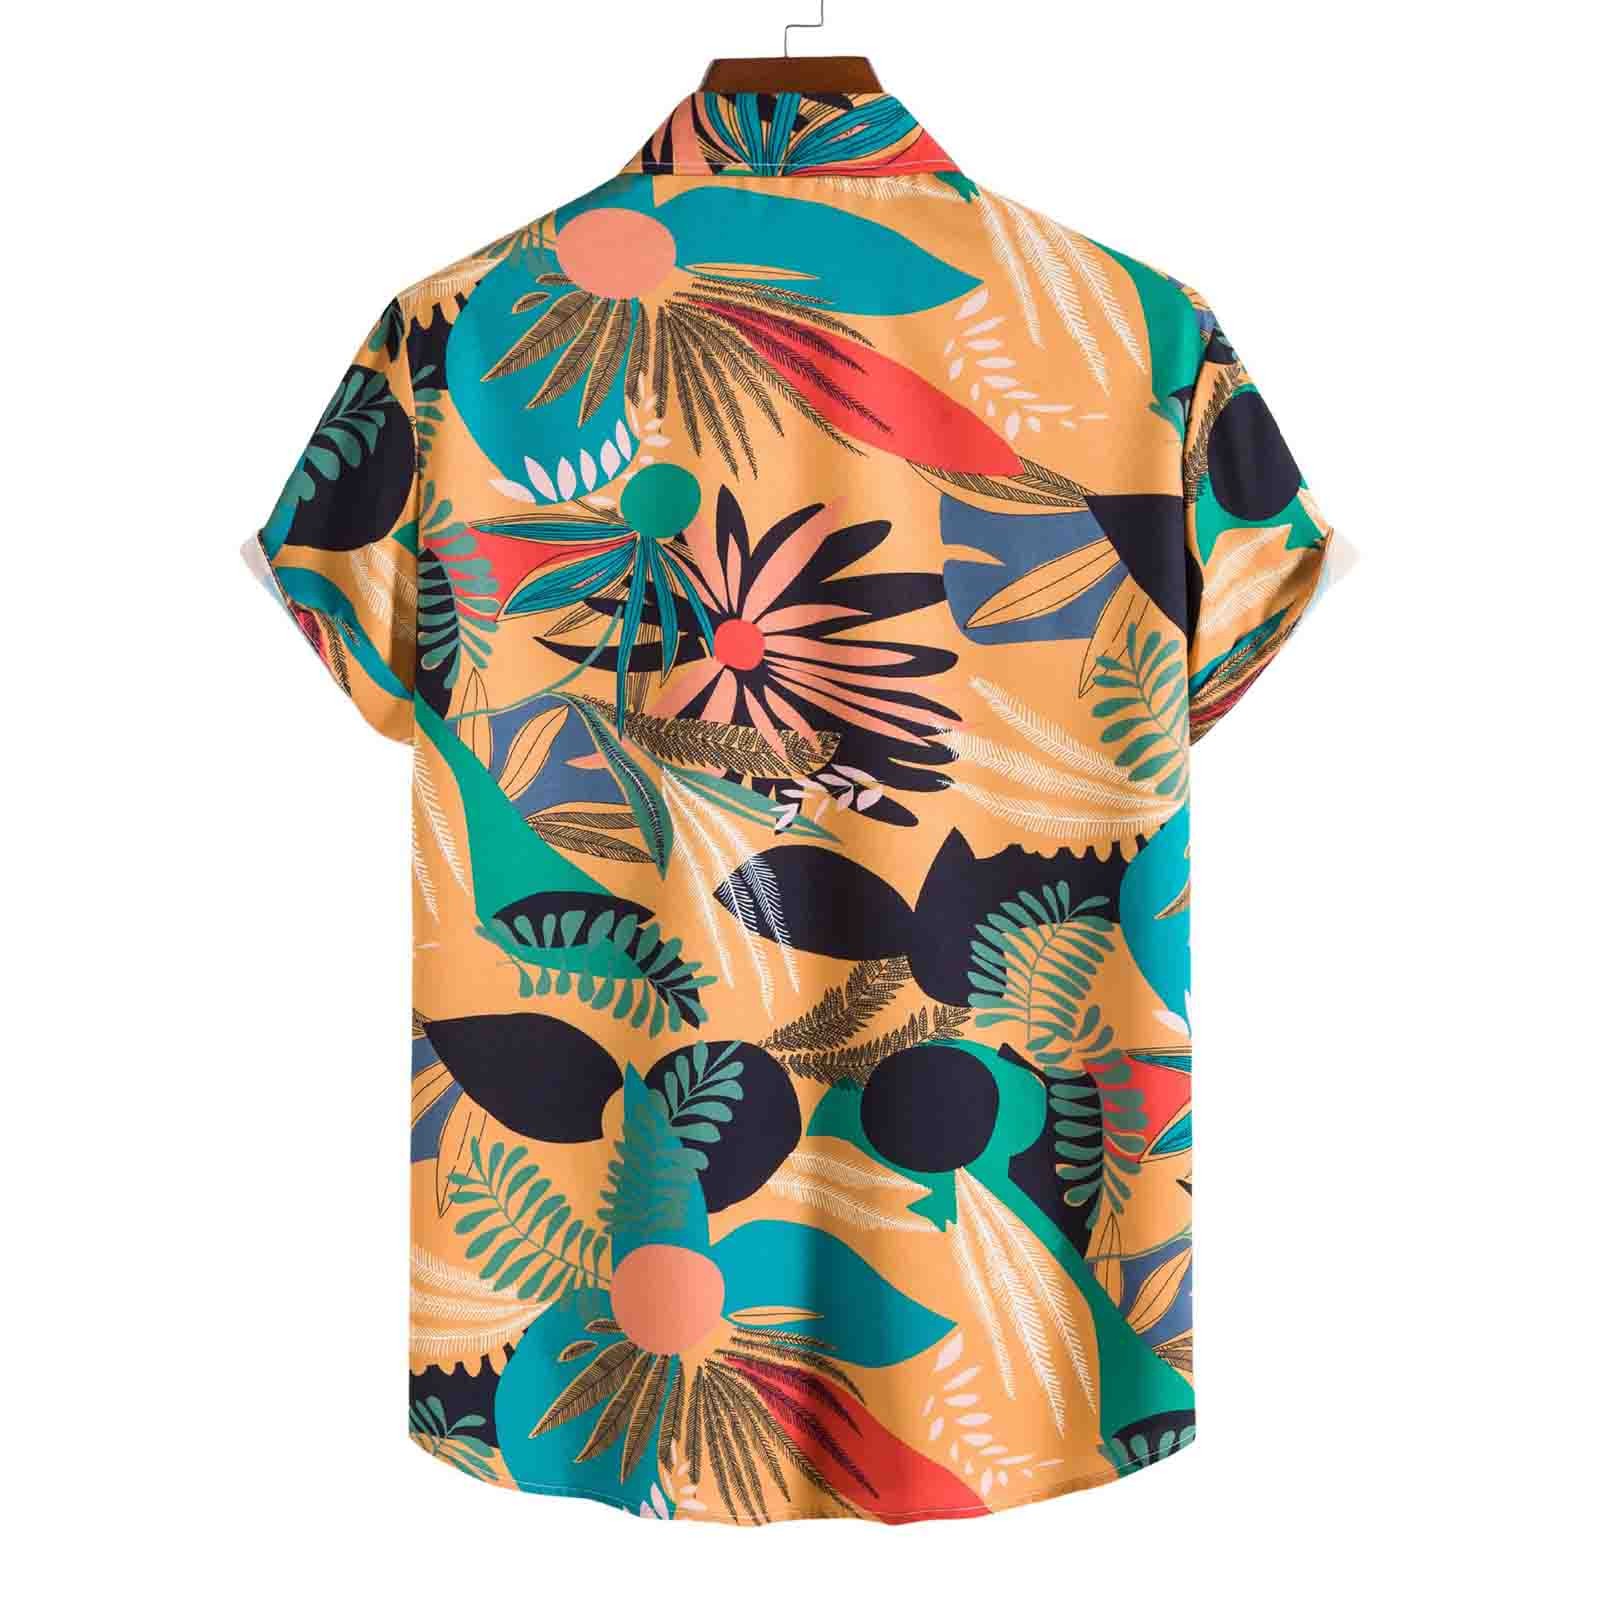 Mens Beach Shirts Short Sleeve,Mens Funny Hawaiian Shirts 3D Graphic Button Short Sleeve Tropical Holiday Beach Aloha Shirt Yellowjpeg